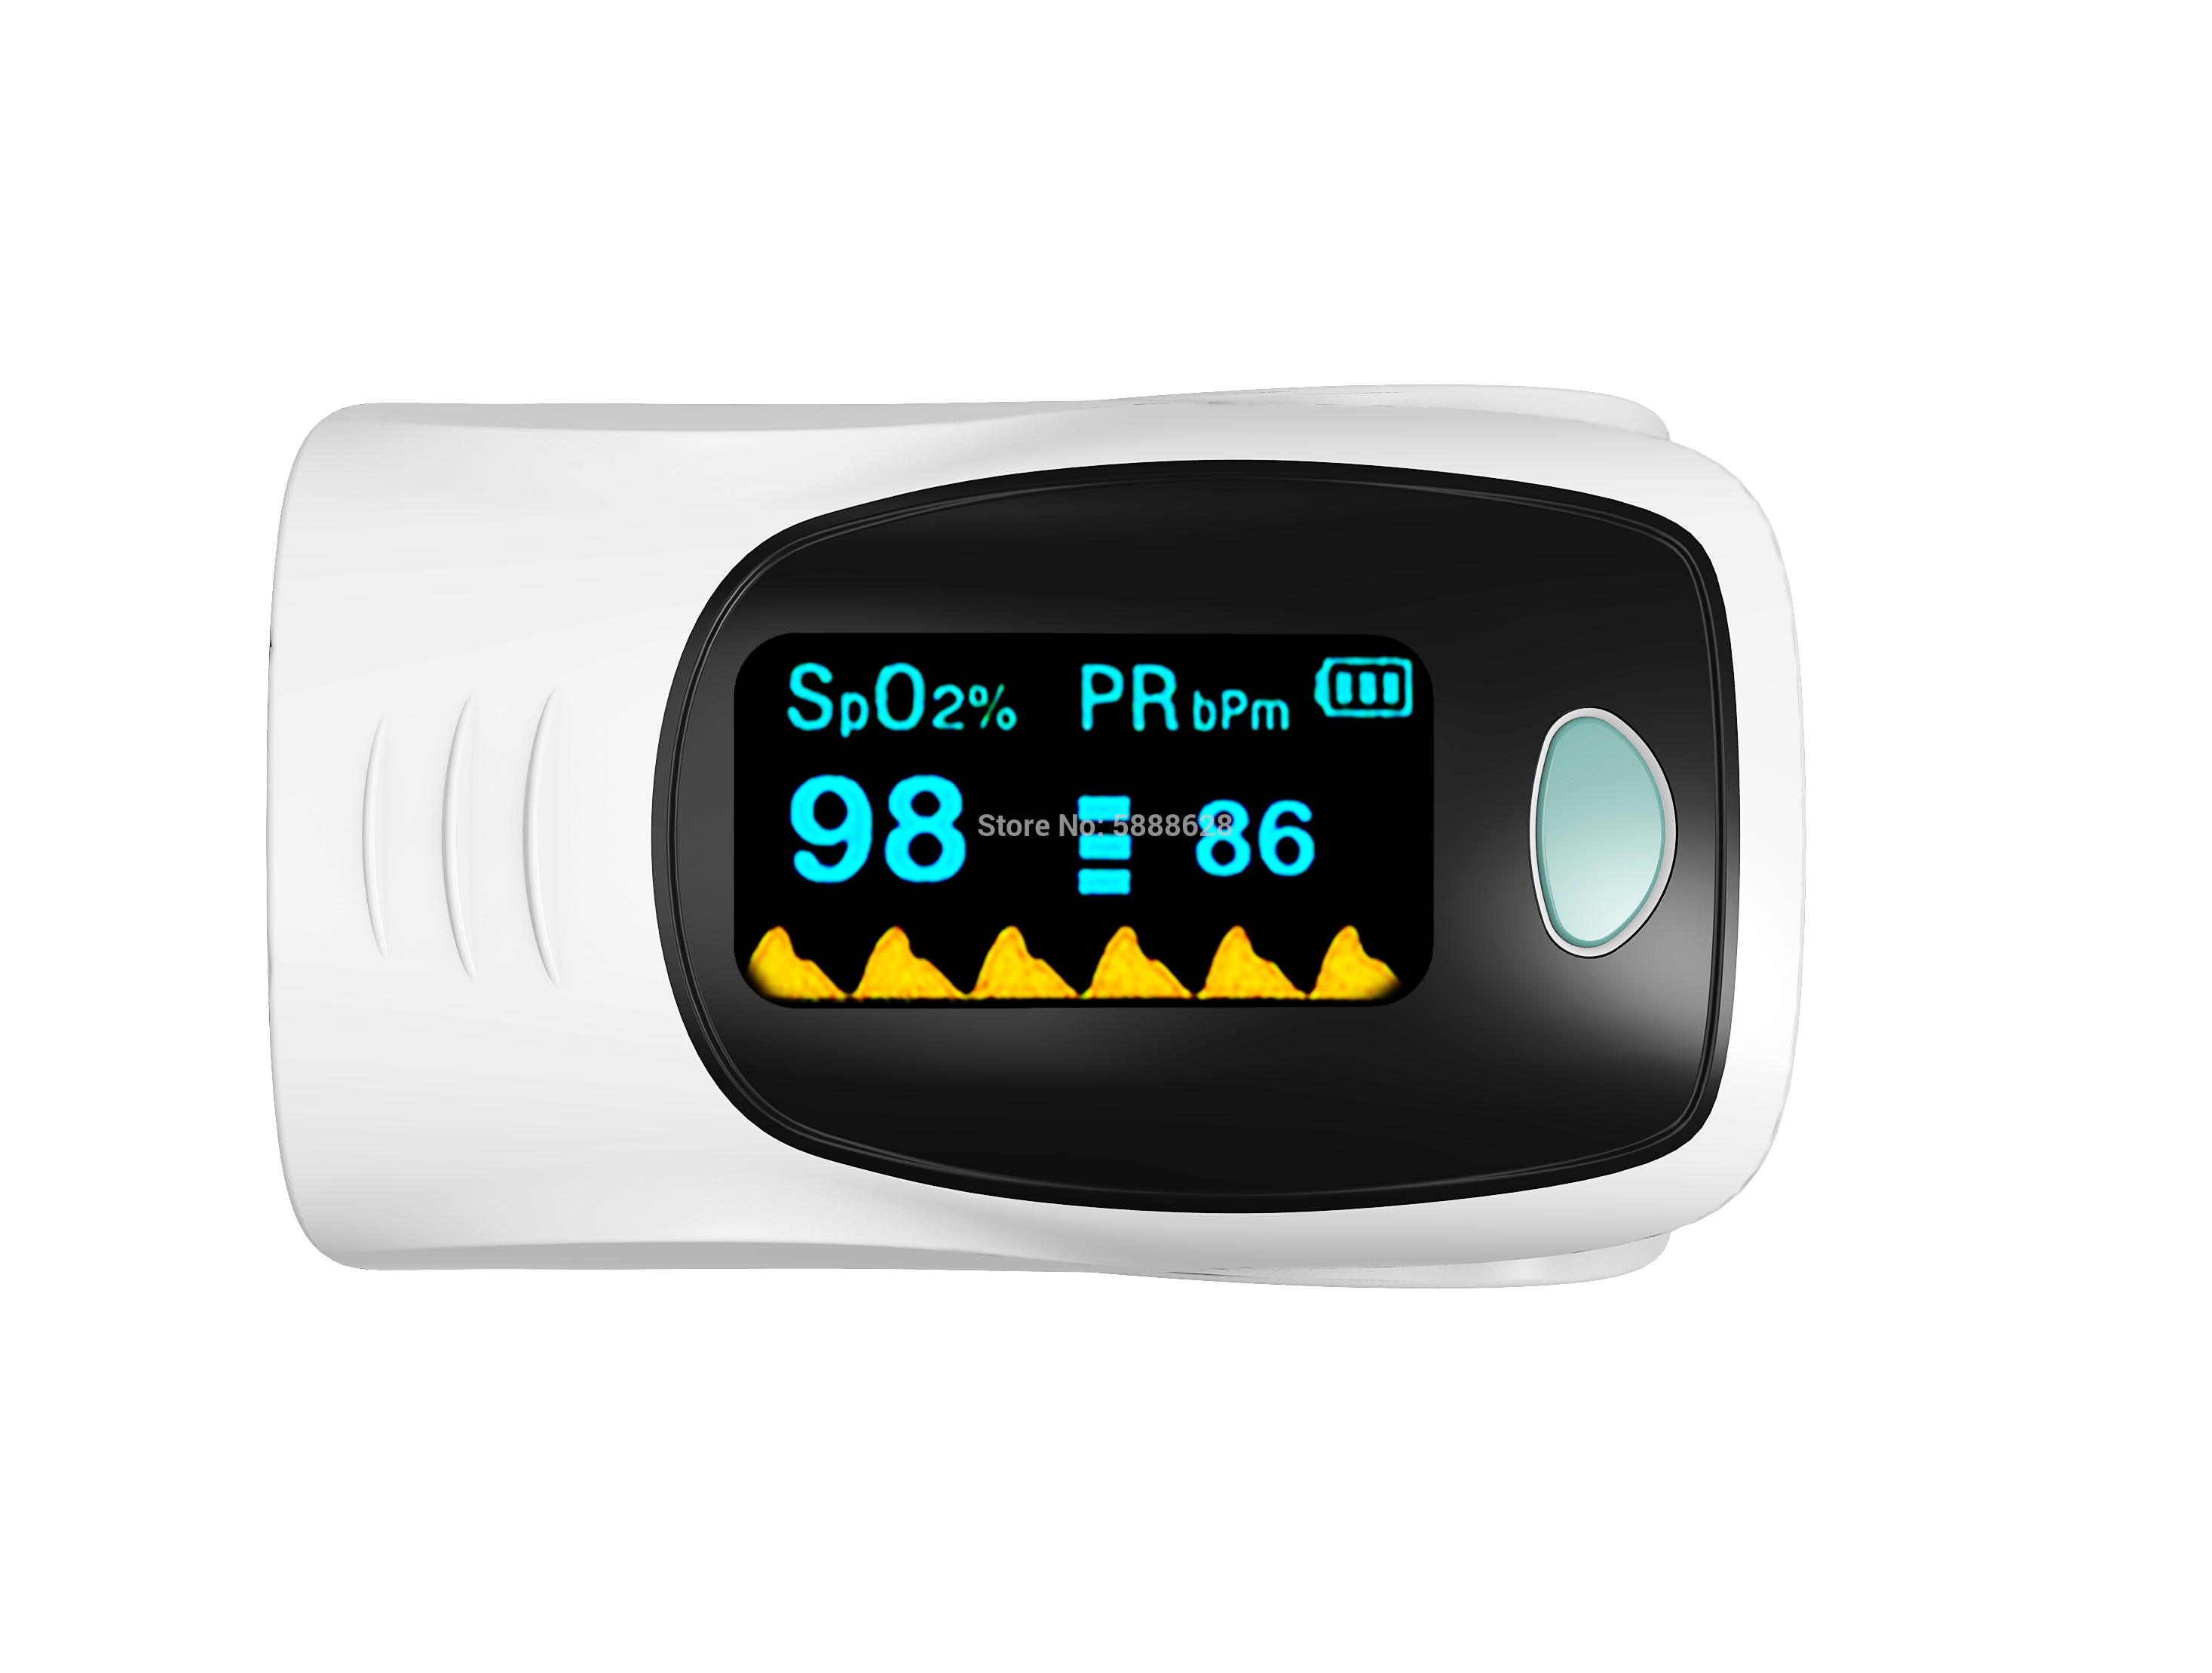 Finger Pulse Oximeter Finger Clip Heartbeat Saturation Oxygen Pulsoksymetr Heart Rate Spo2 Monitor Blood Saturation Meter Sensor